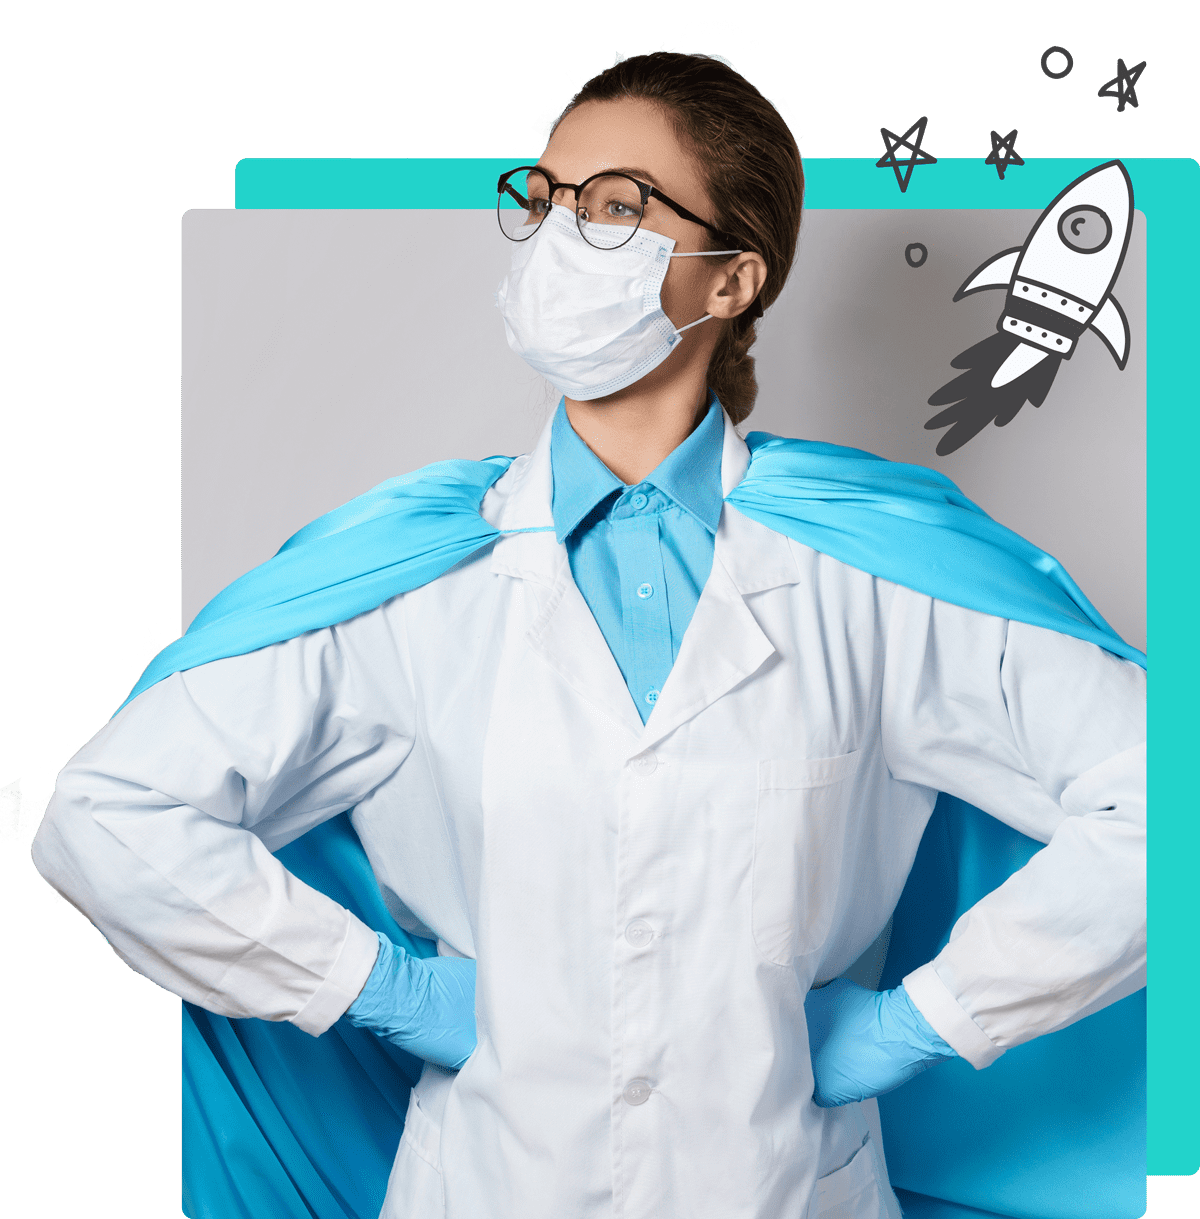 Superhero medical professional